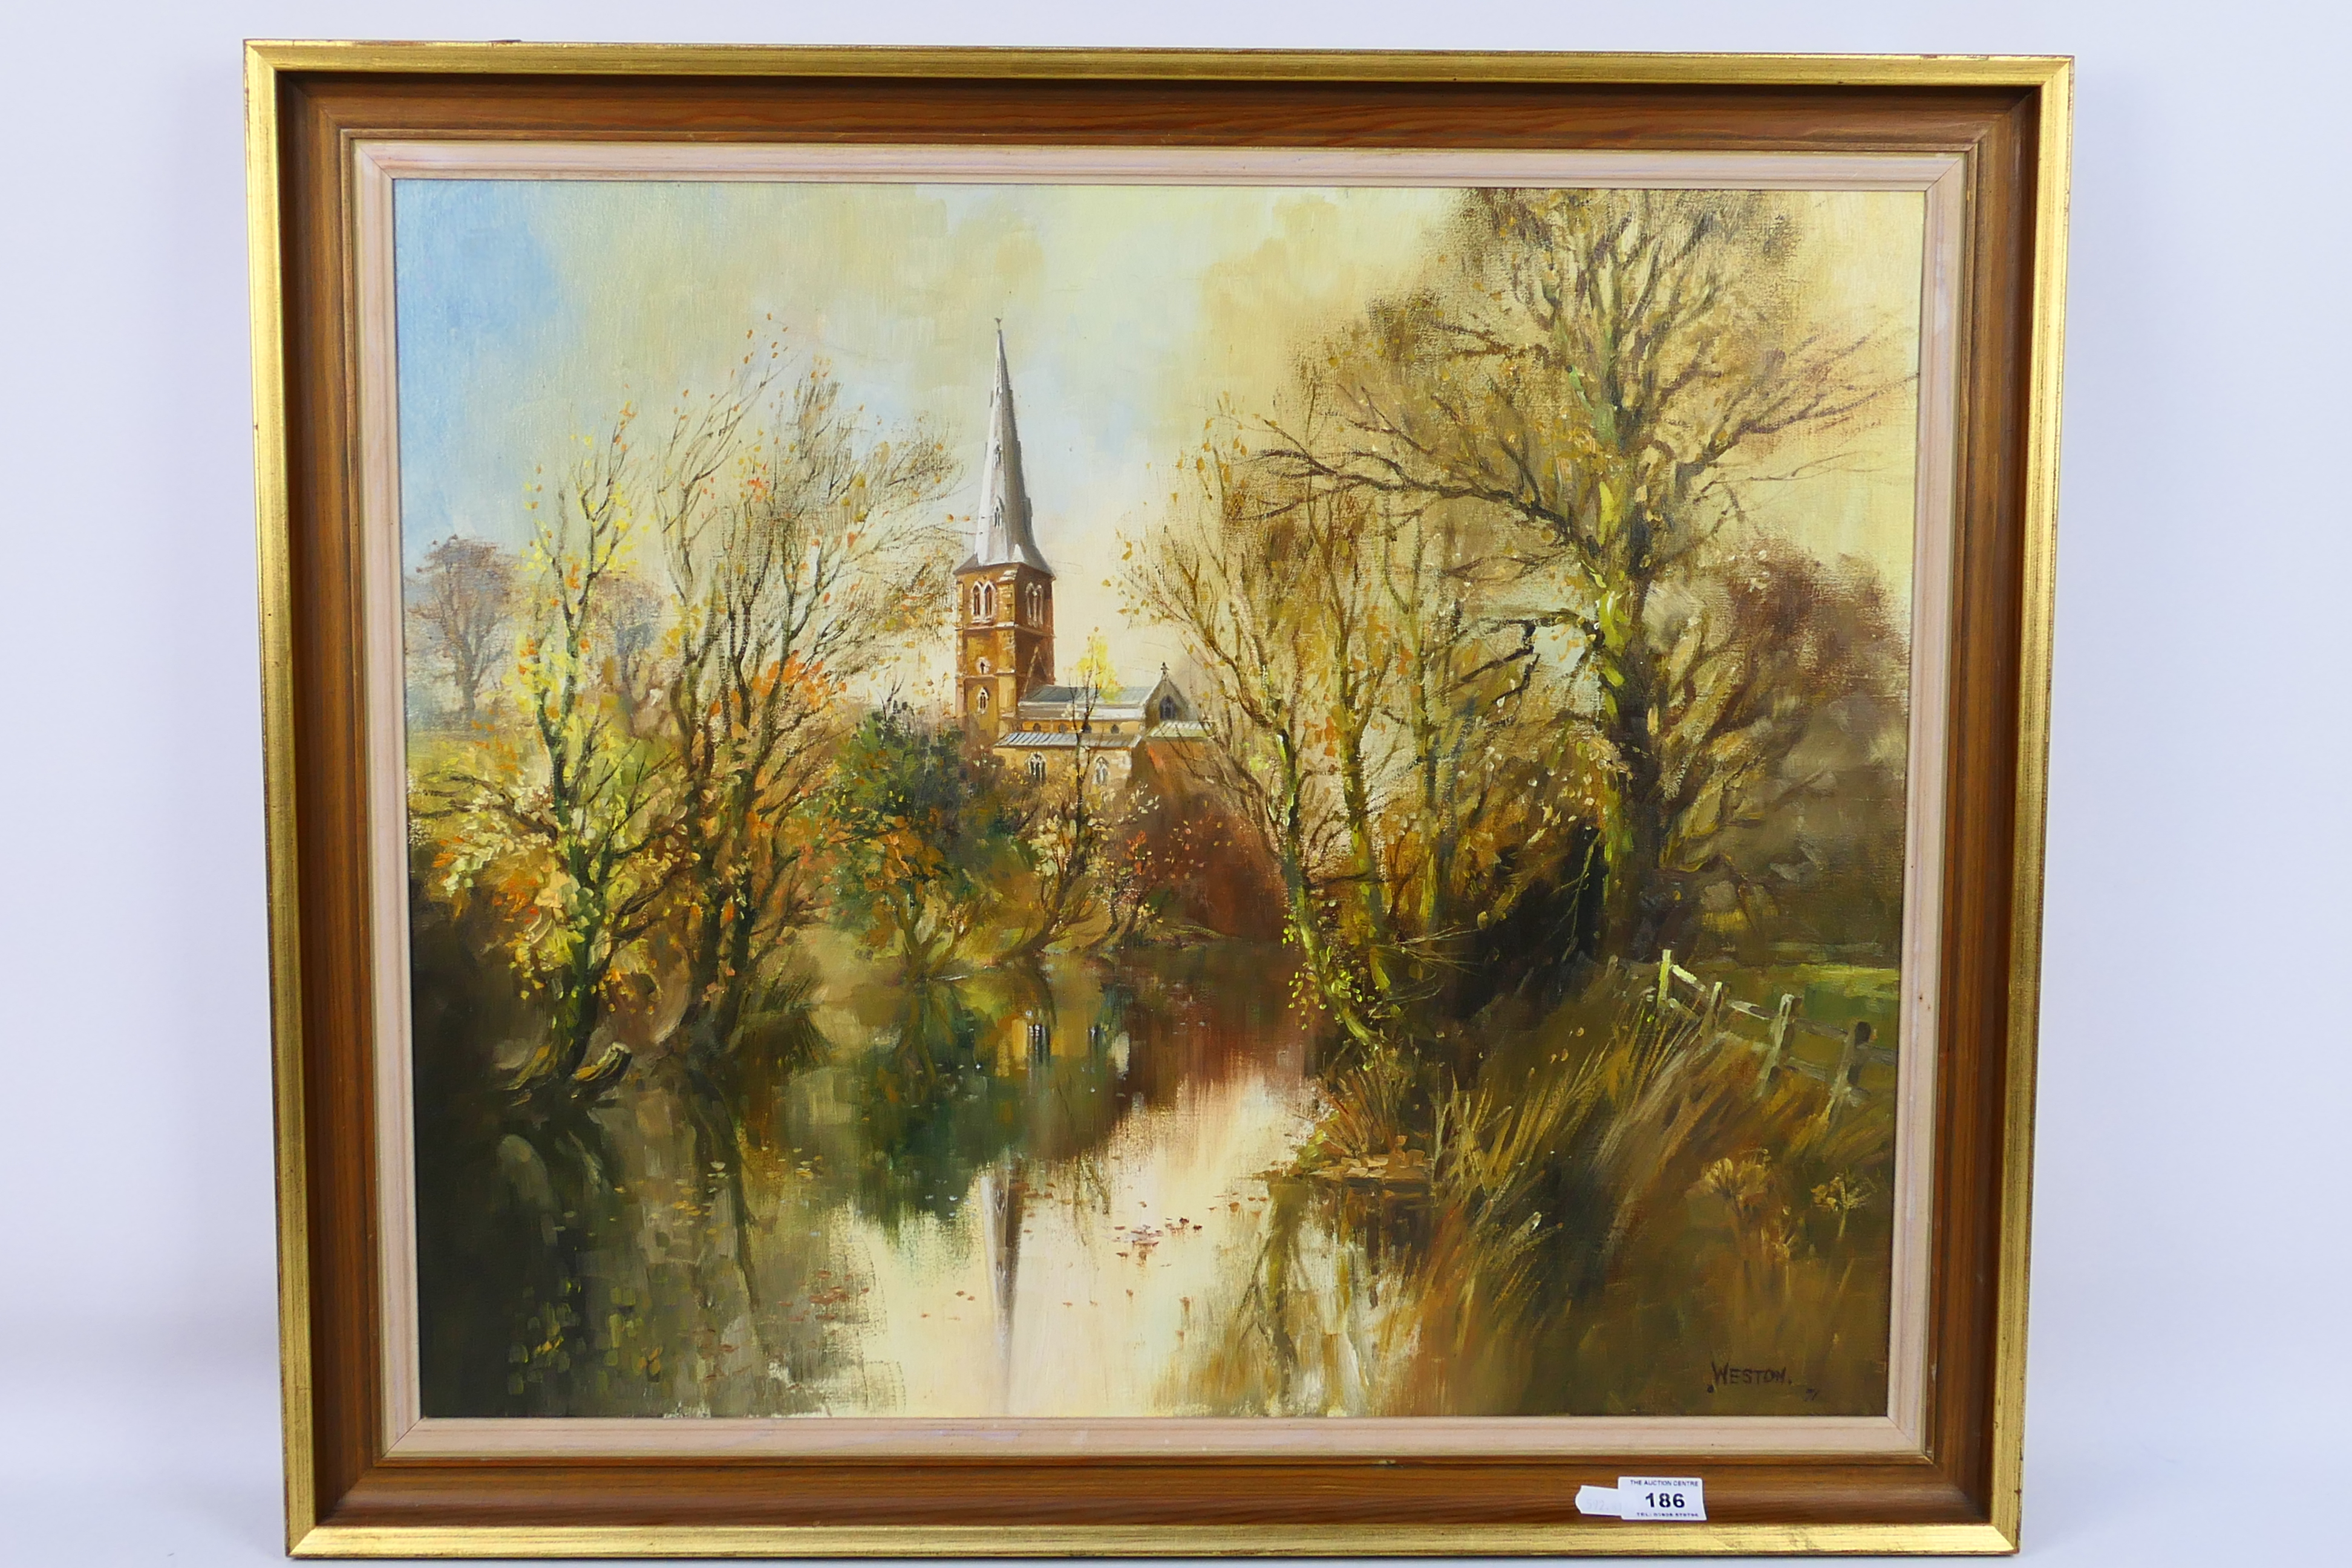 David Weston (1935 - 2011) - A framed oil on canvas landscape scene depicting a church beside a